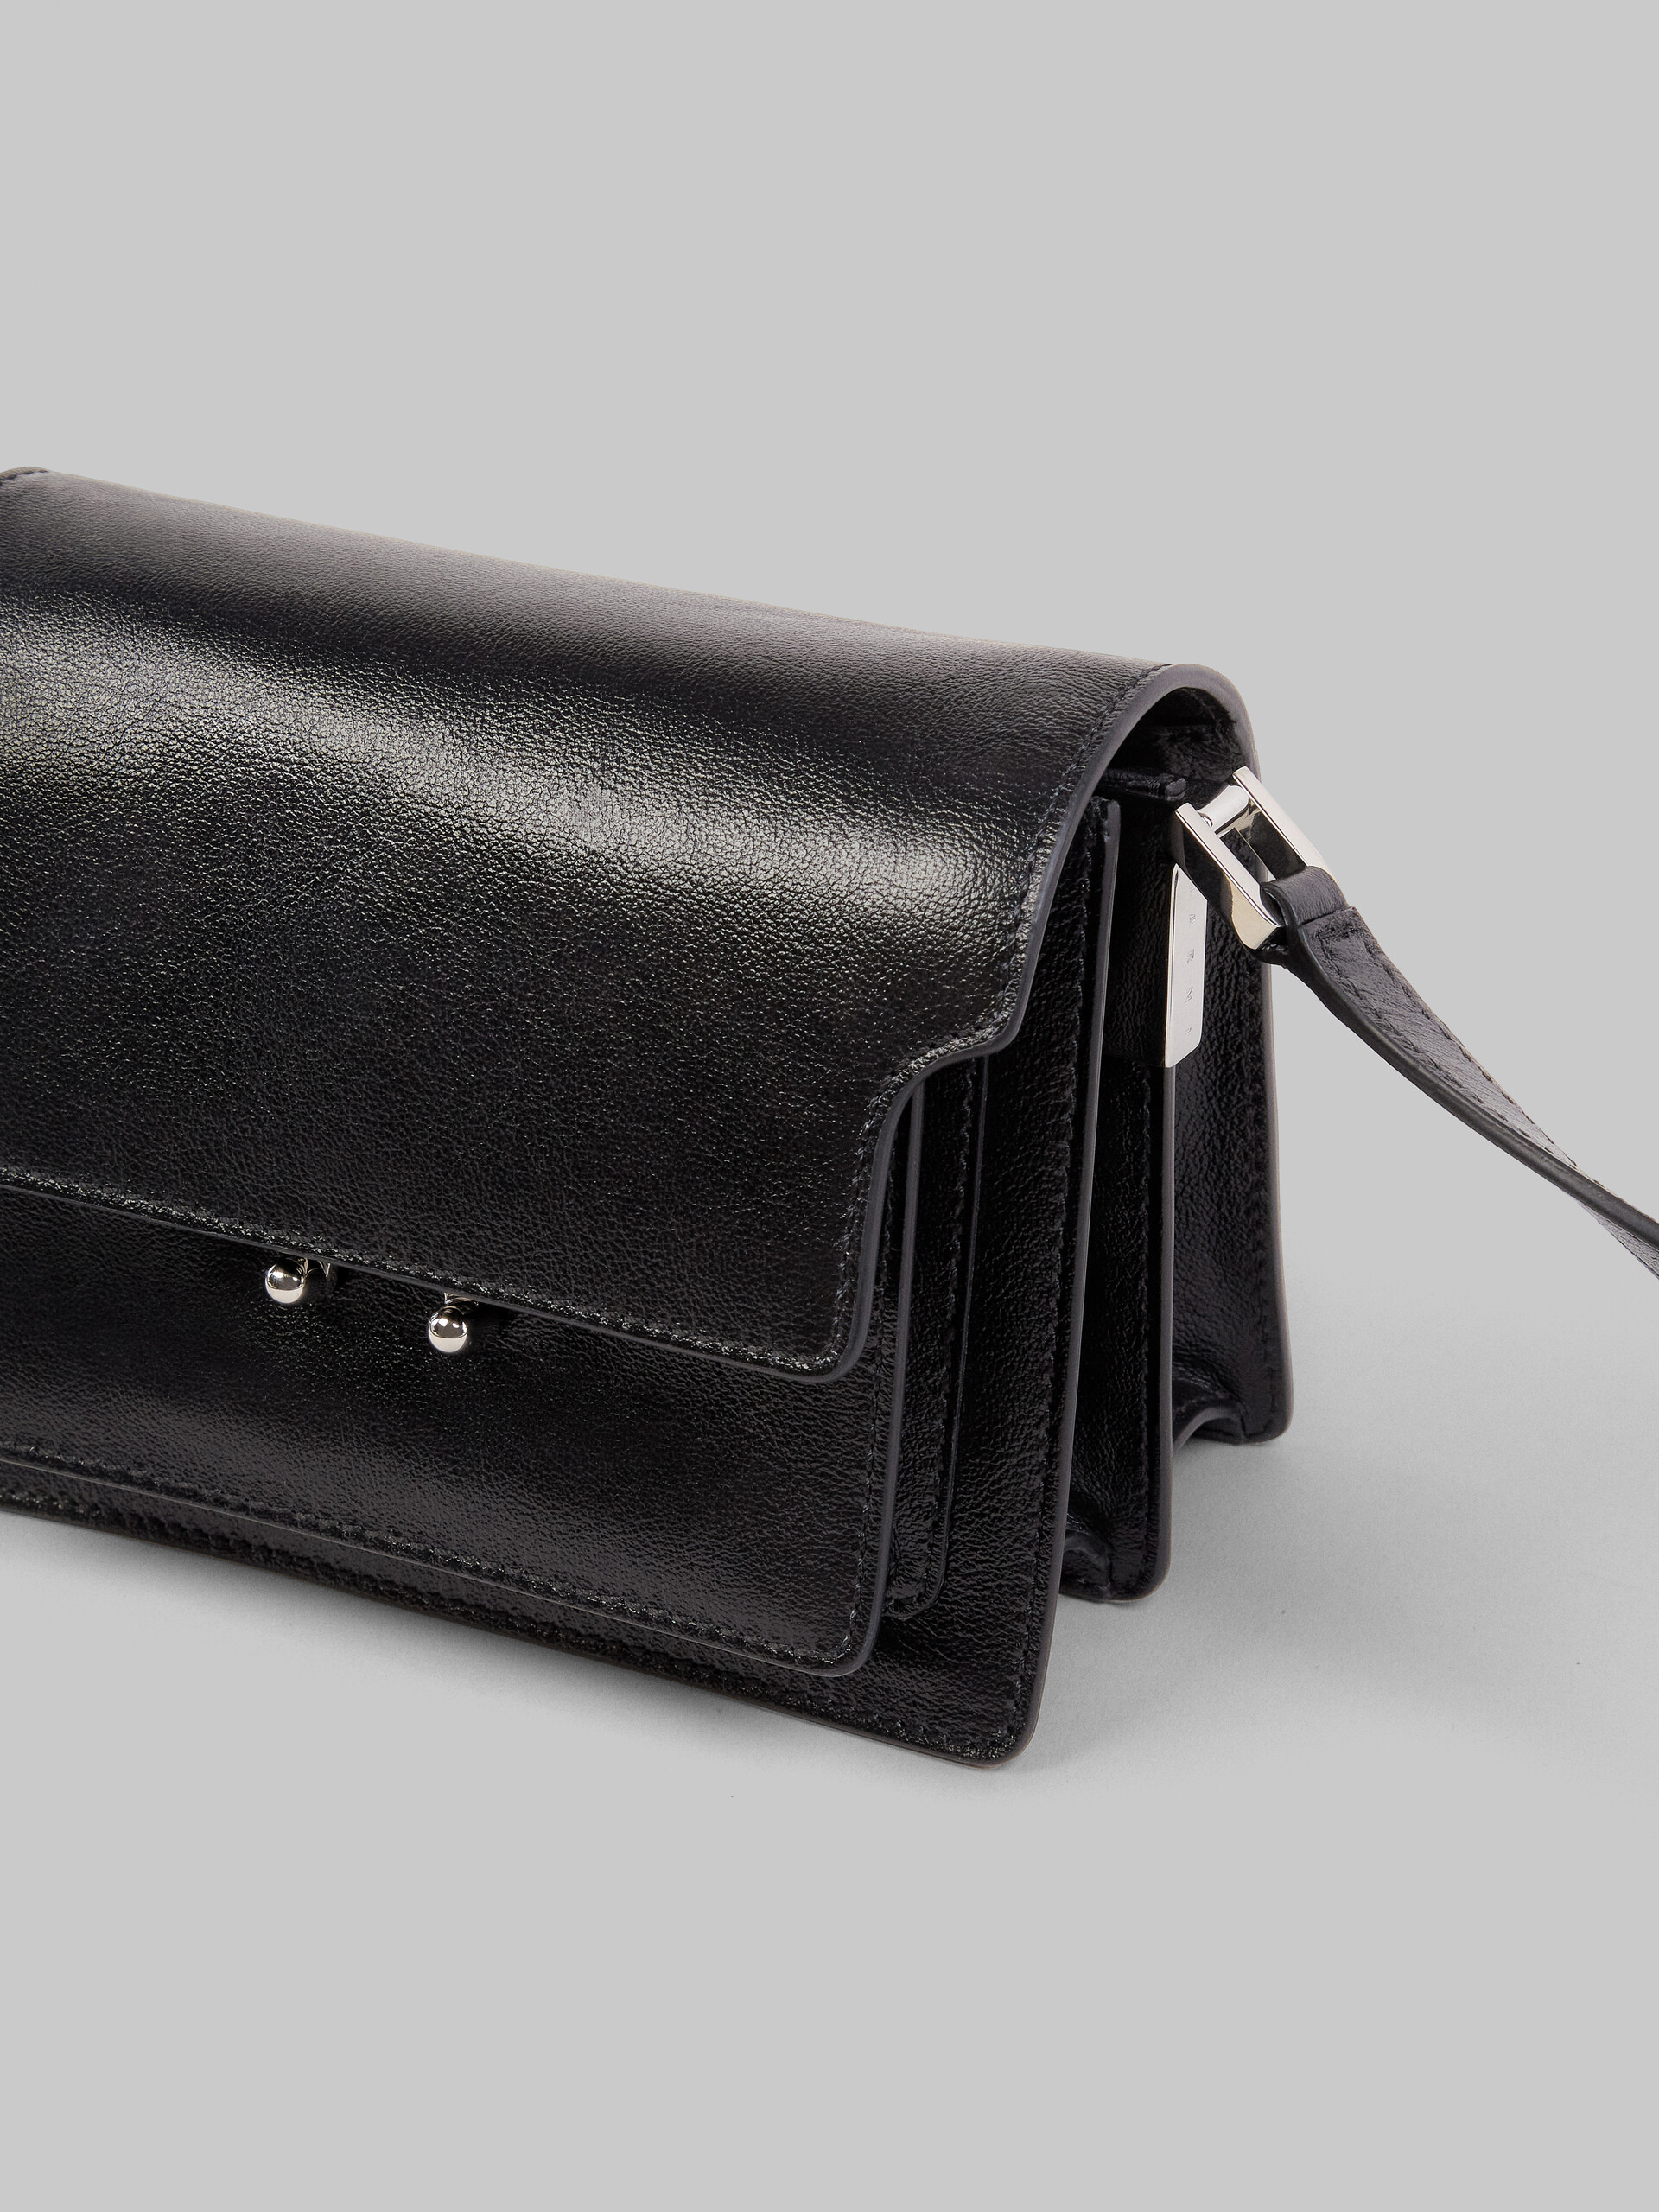 Trunk Soft Mini Bag in black leather - Shoulder Bags - Image 4